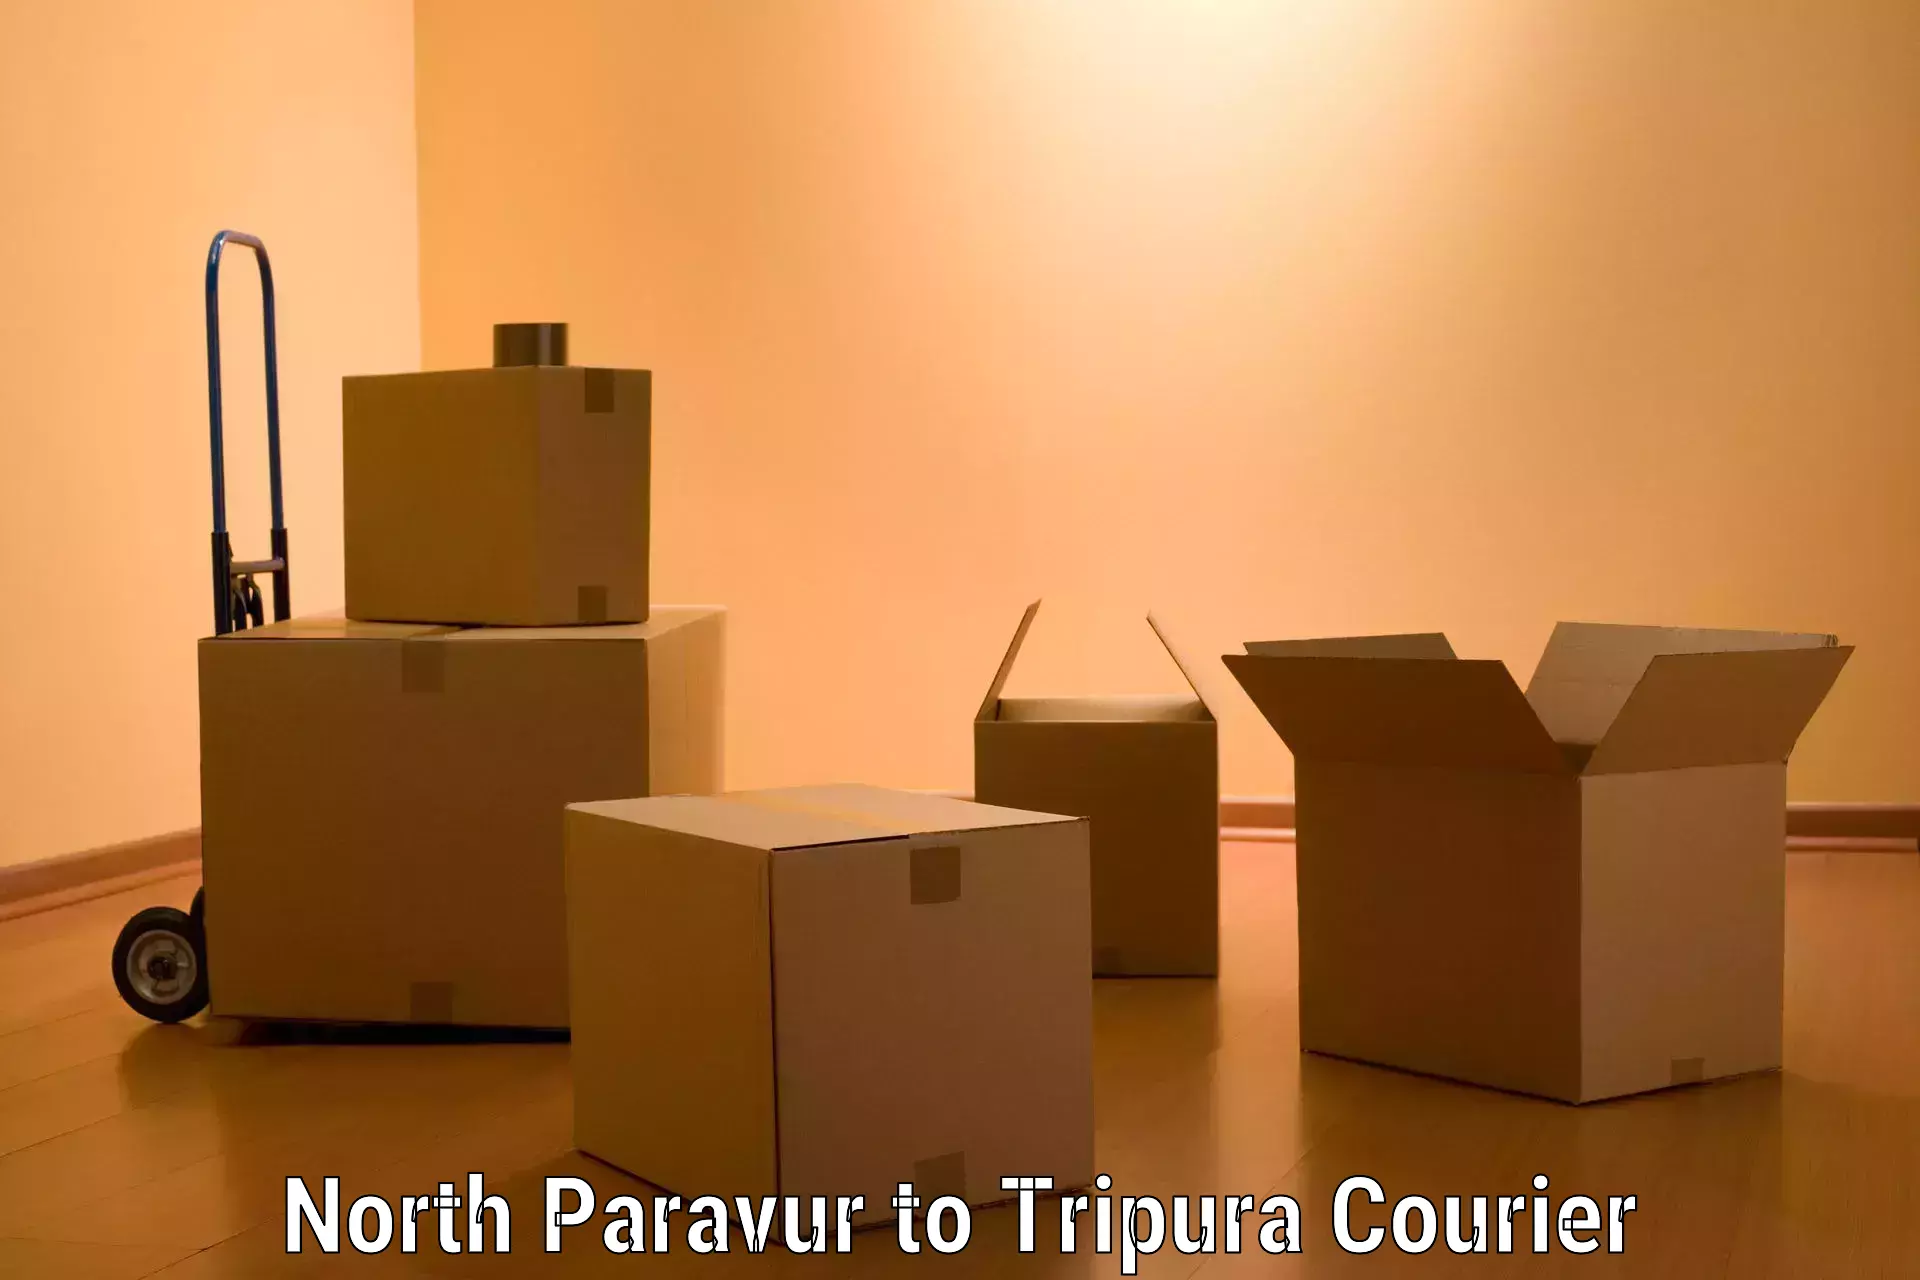 Professional moving company North Paravur to Tripura